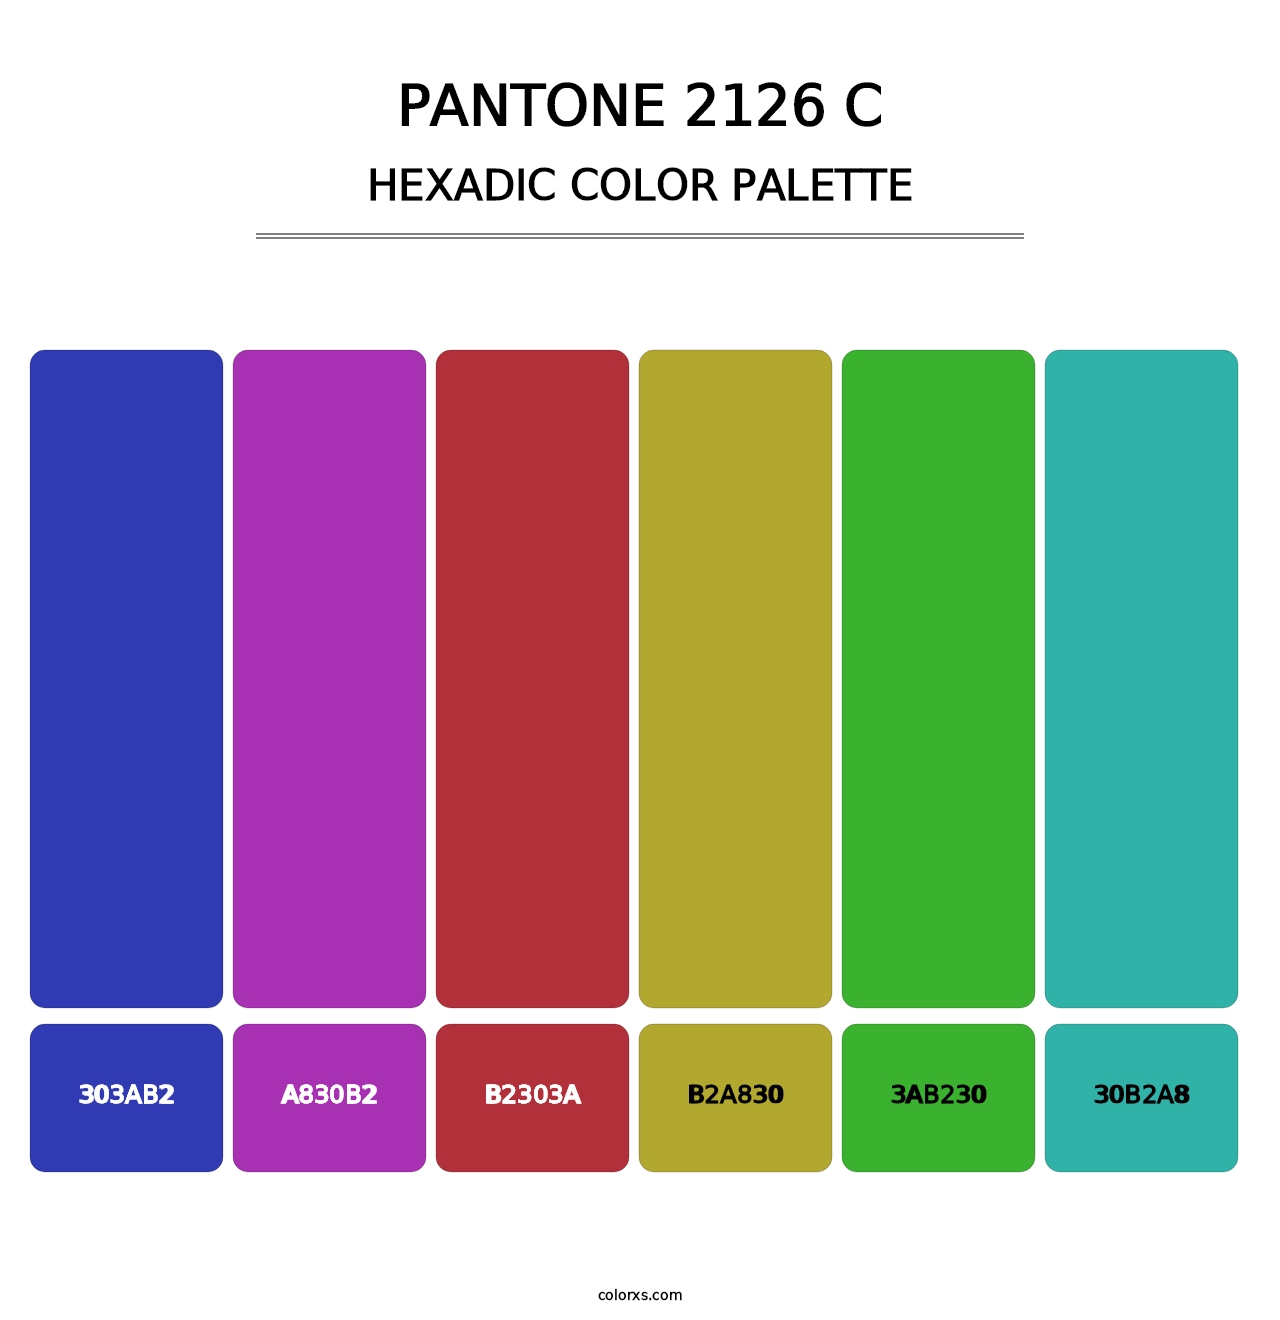 PANTONE 2126 C - Hexadic Color Palette